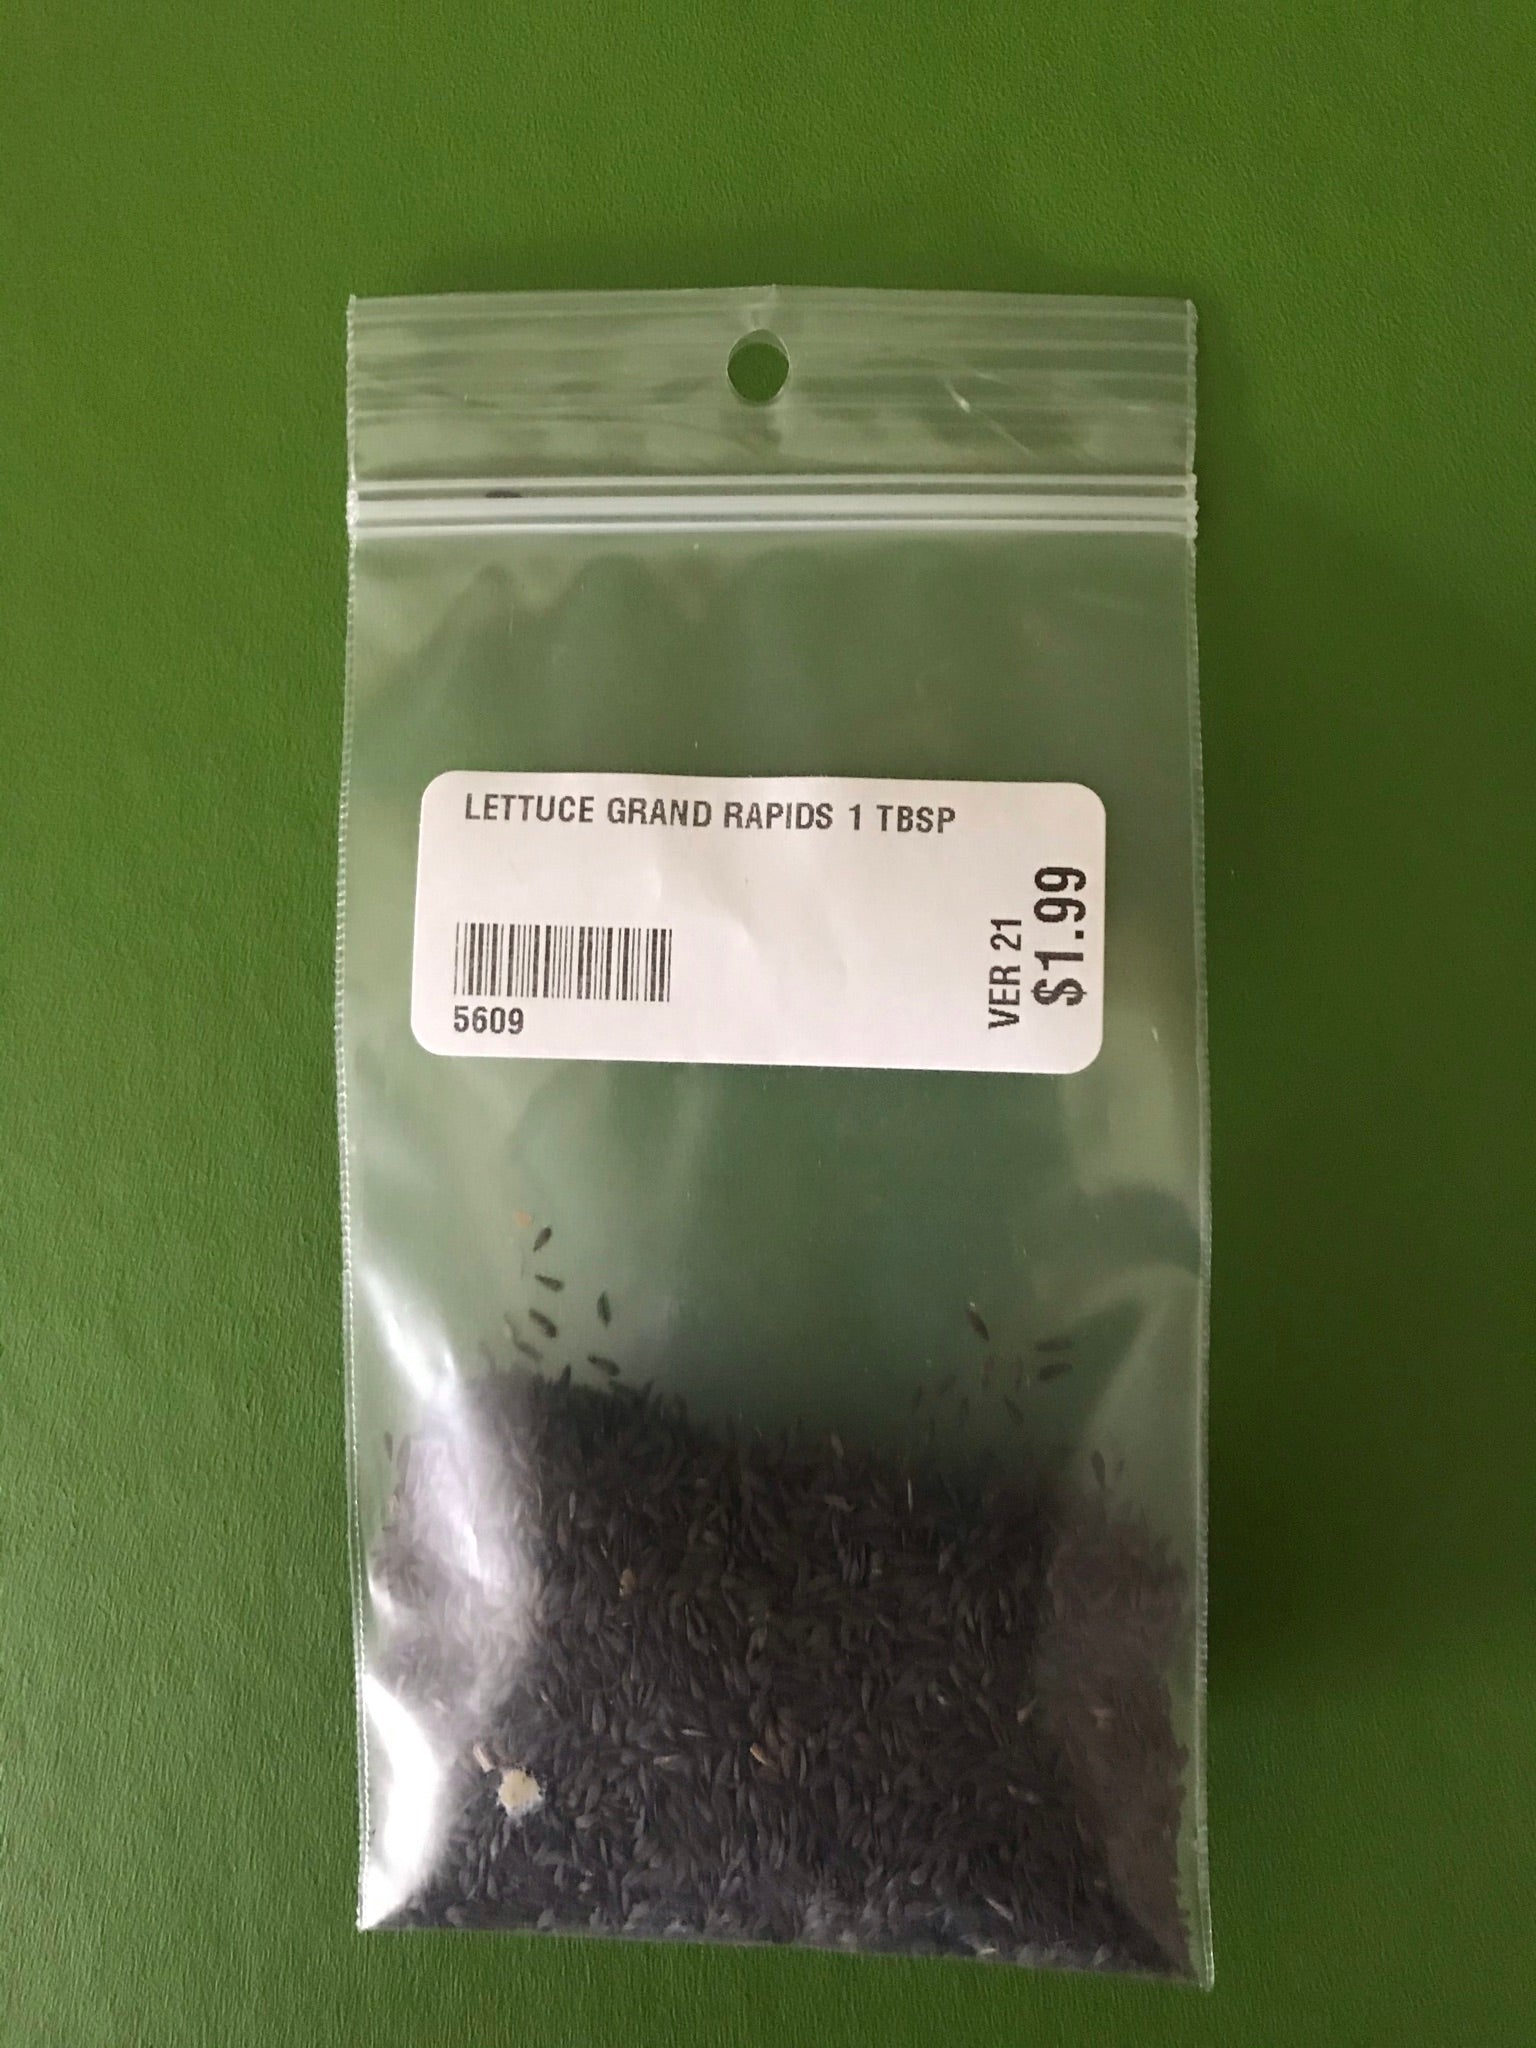 Grand Rapids Lettuce Seeds (Leaf Type) (45 days) - 1 Tbsp - Bulk